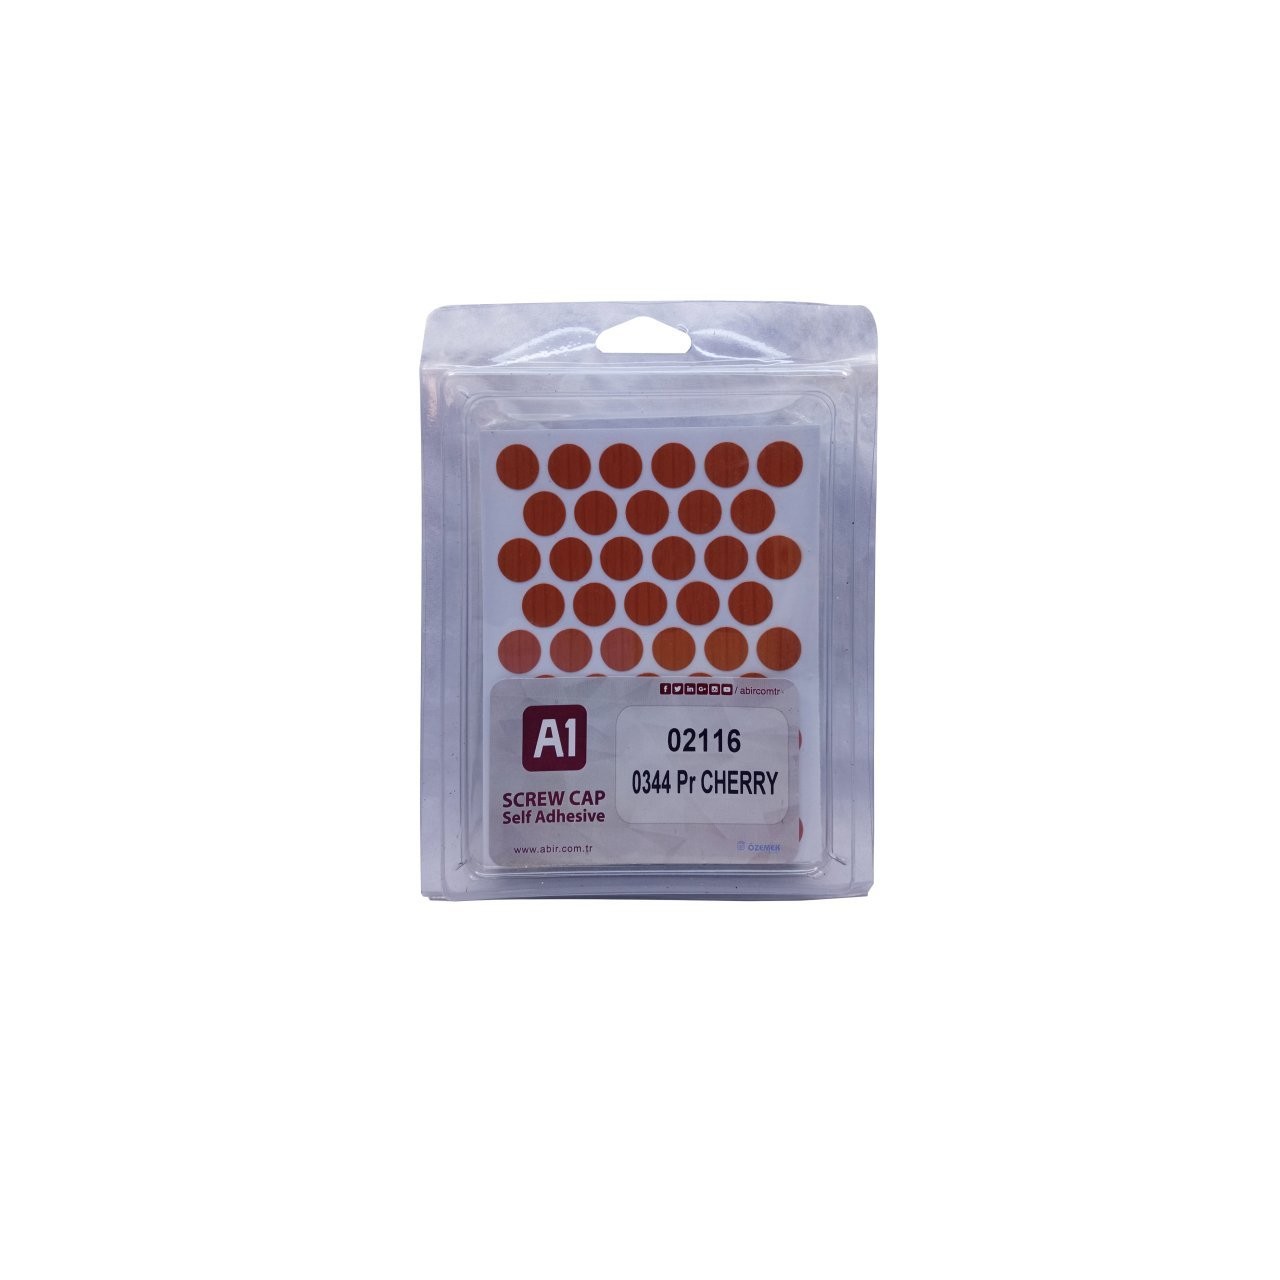  PVC Self-Adhesive Screw Cap with Pattern 14mm Pr Cherry